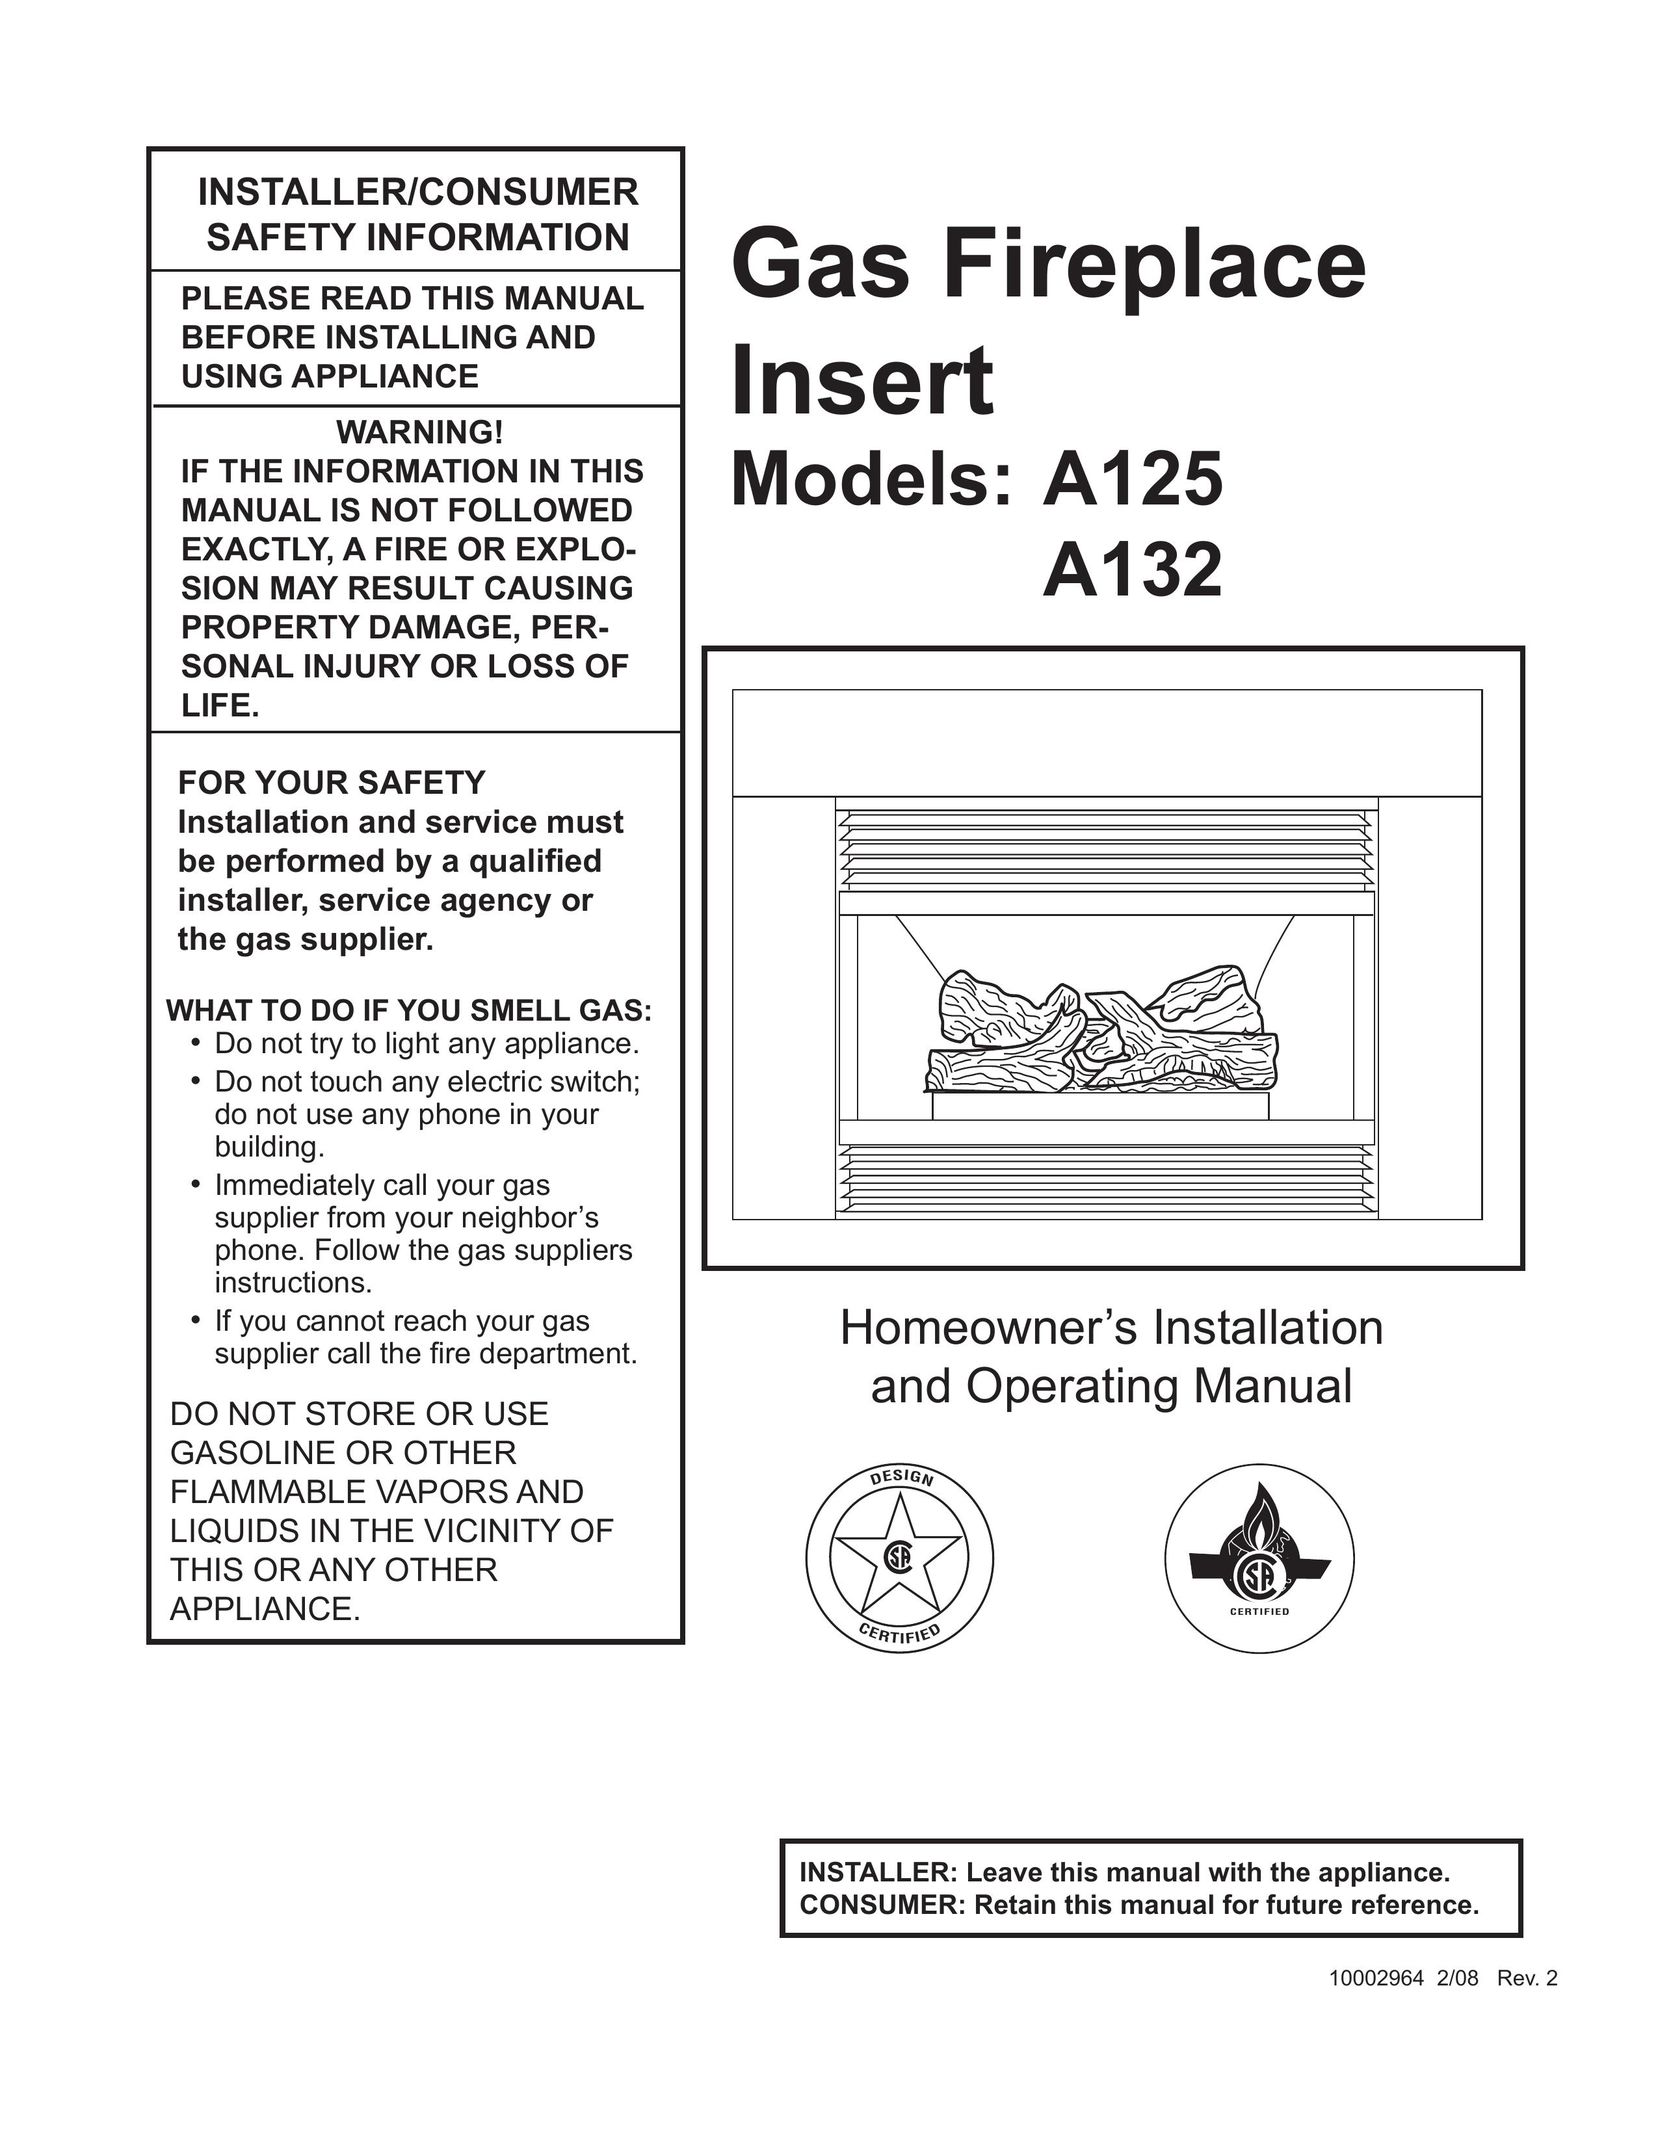 CFM Corporation A125 Indoor Fireplace User Manual